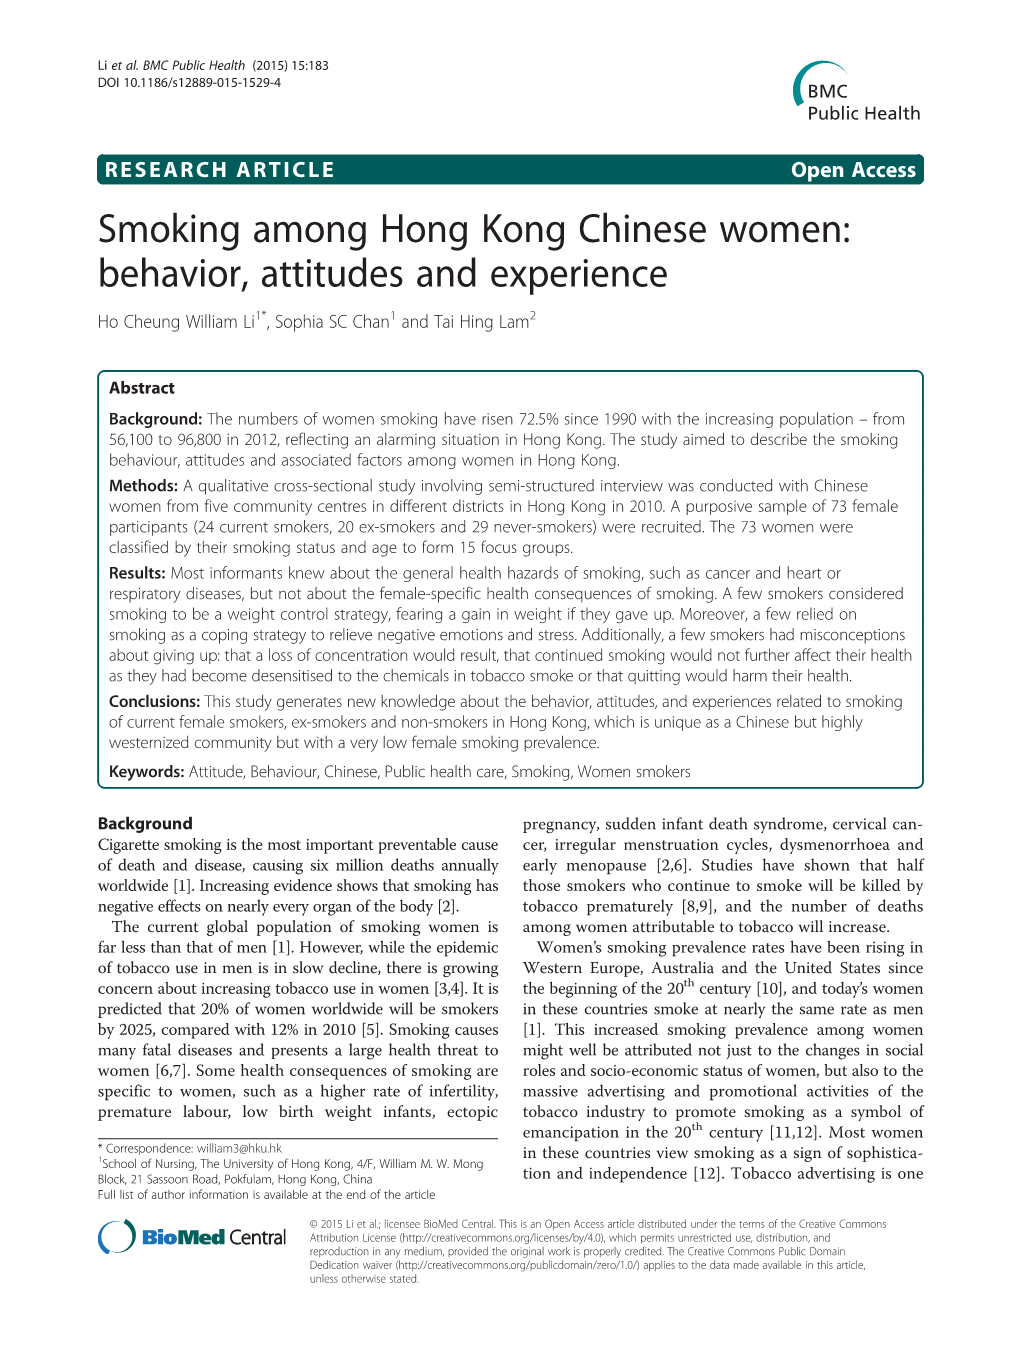 Smoking Among Hong Kong Chinese Women: Behavior, Attitudes and Experience Ho Cheung William Li1*, Sophia SC Chan1 and Tai Hing Lam2